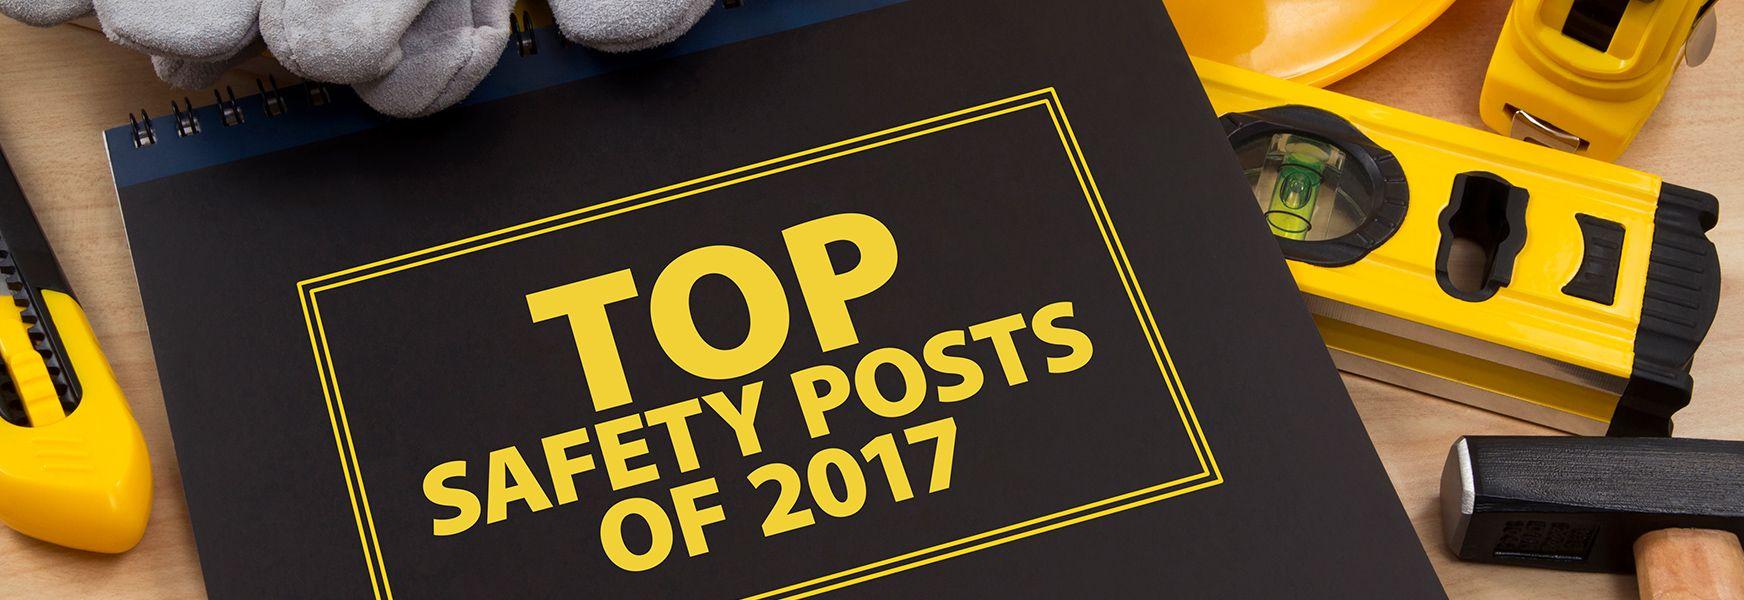 Memic Logo - Top Safety Posts of 2017